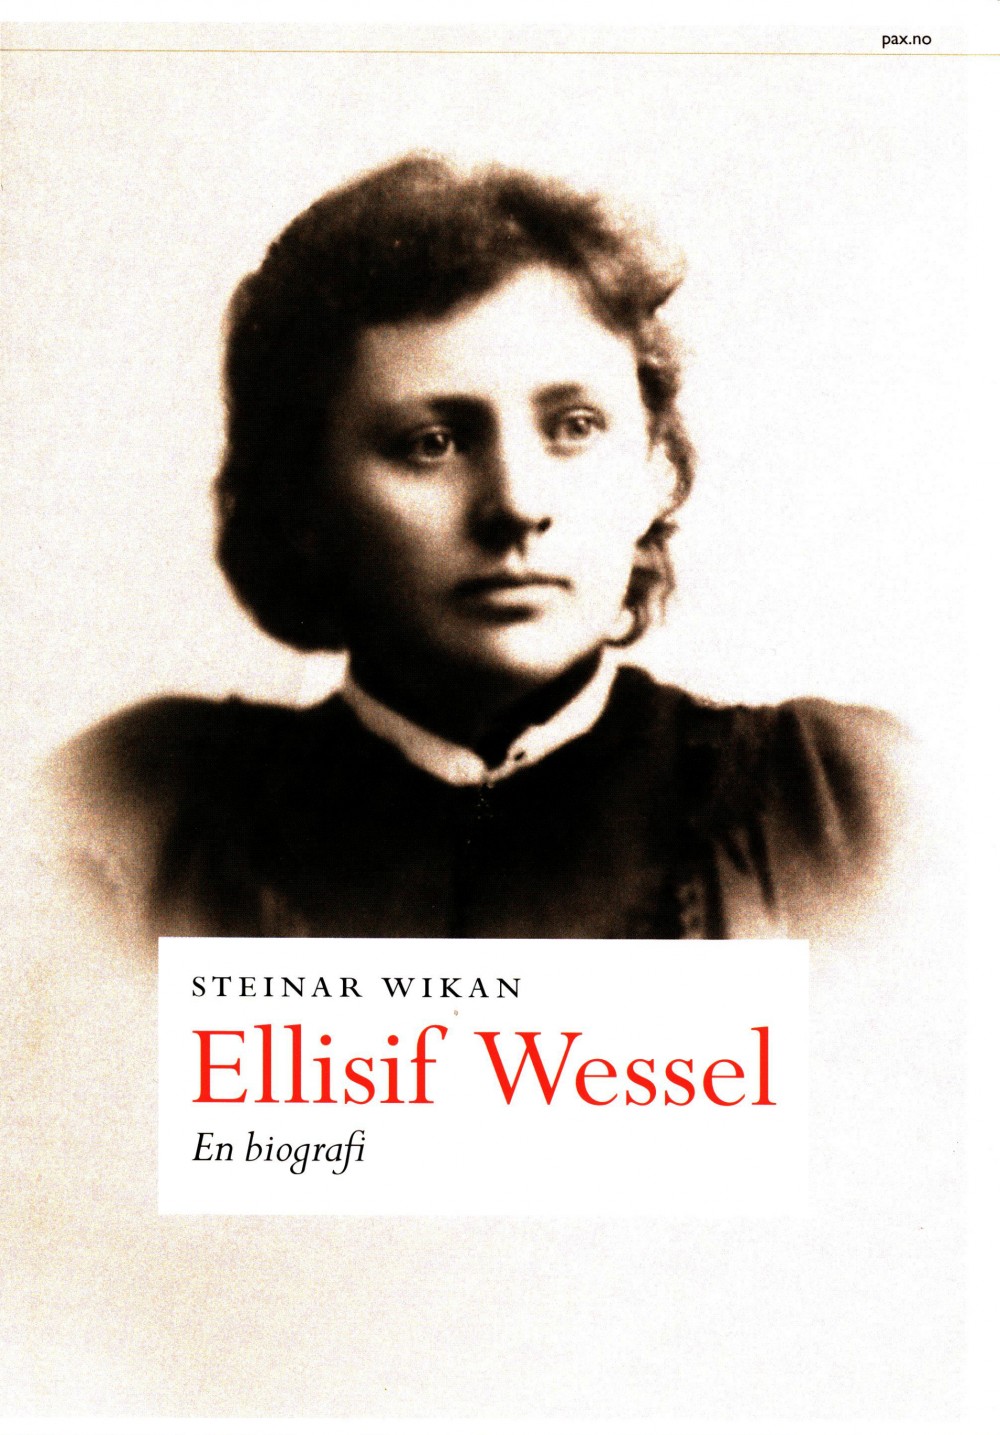 Steinar Wikan: Ellisif Wessel - En biografi